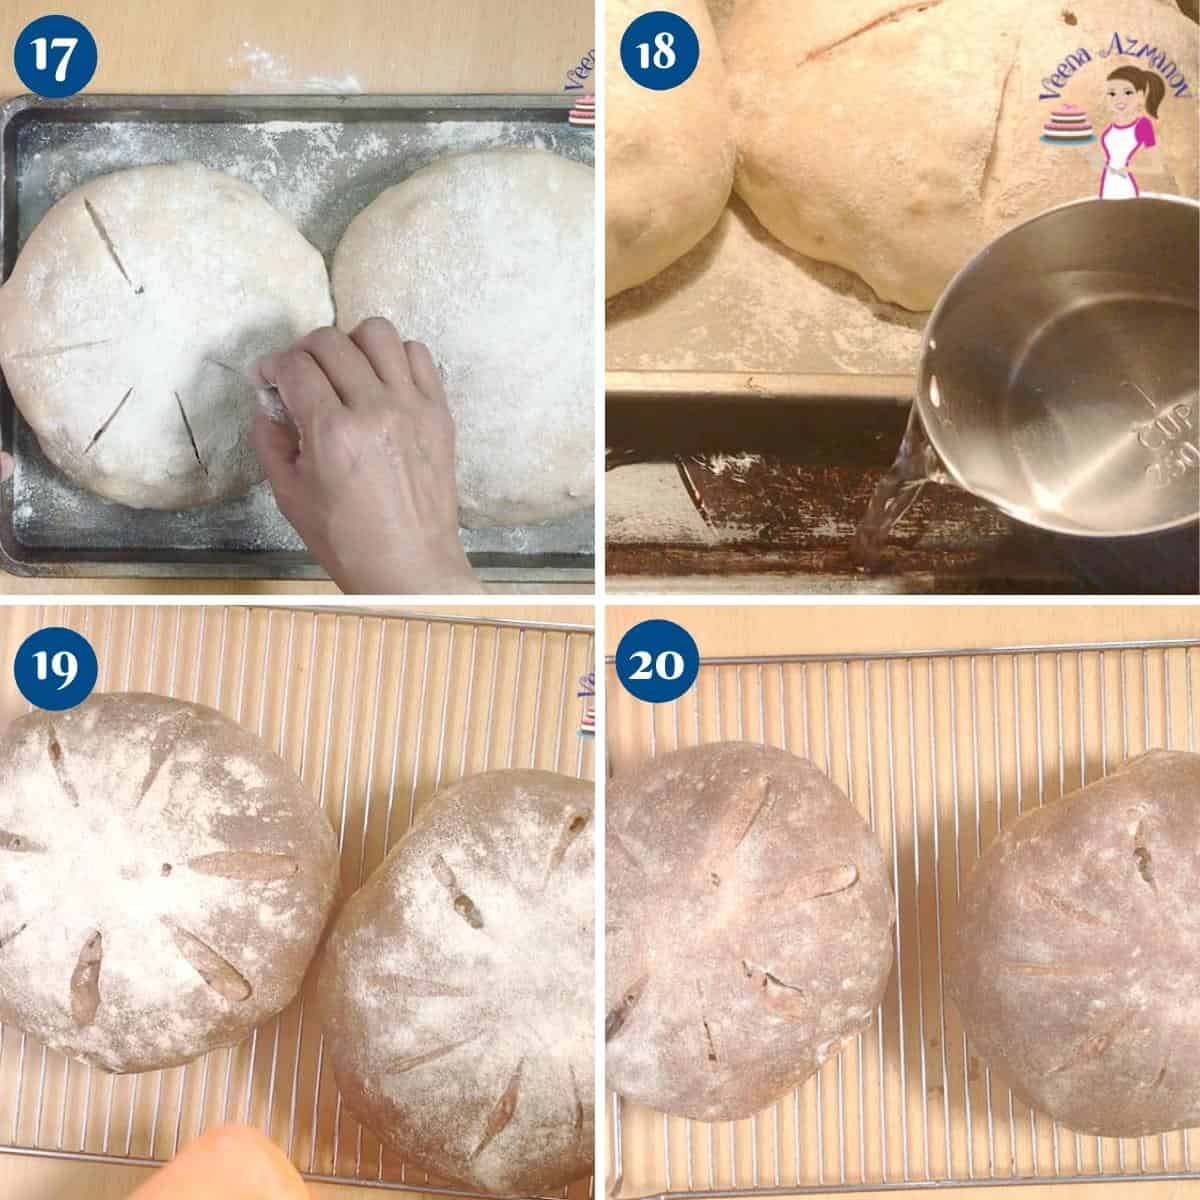 Raisin walnut bread Progress Pictures collage.